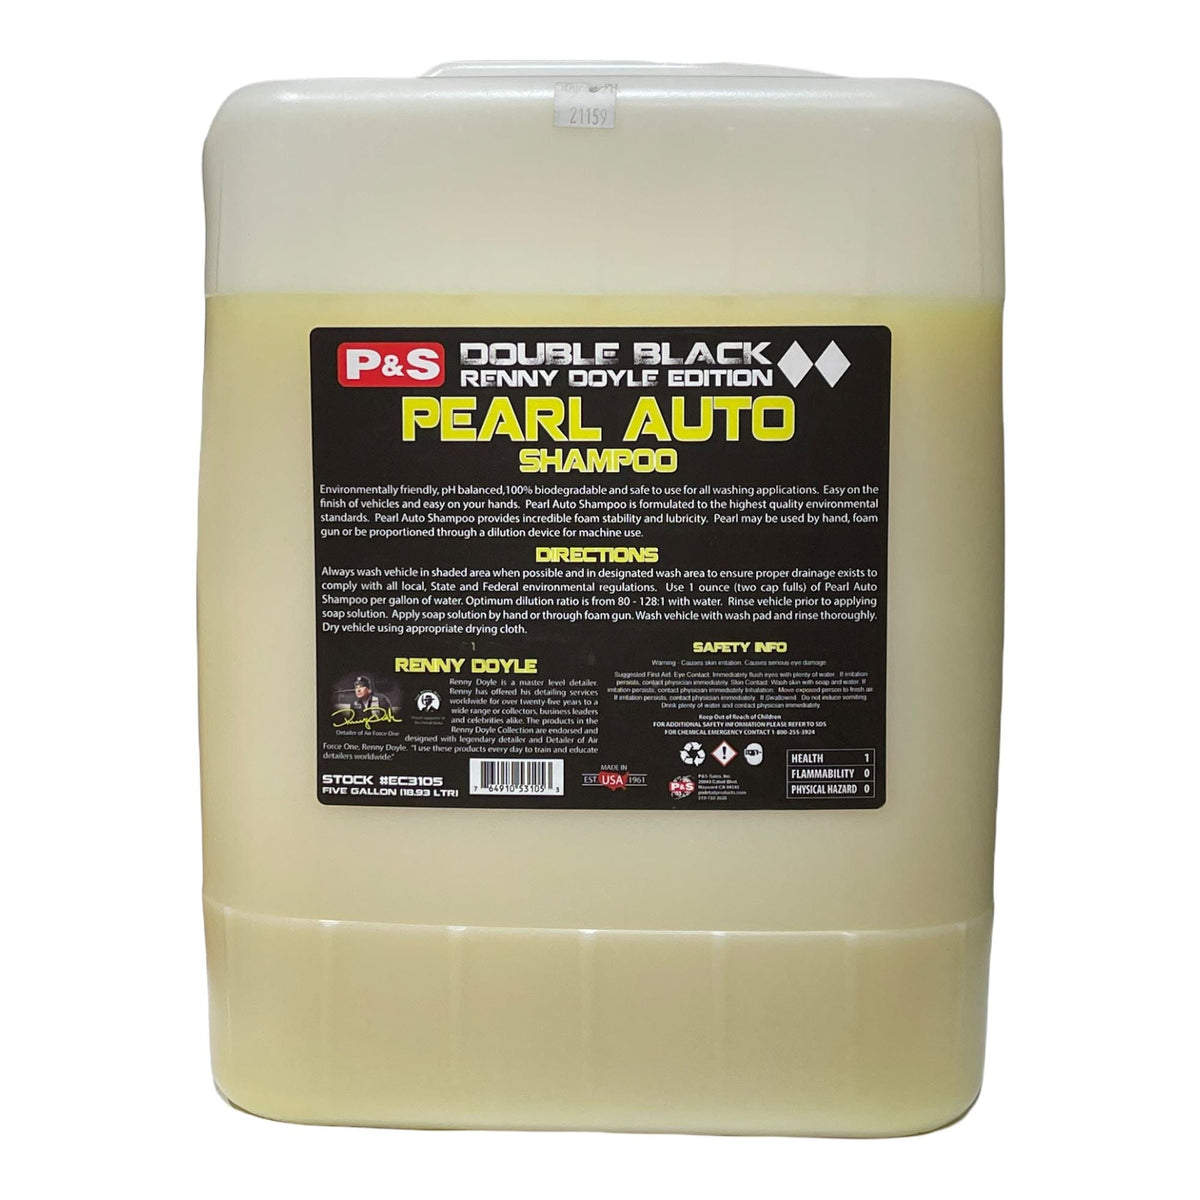 P&S Wash And Wax 5 Gallon, Concentrated Car Wash Shampoo